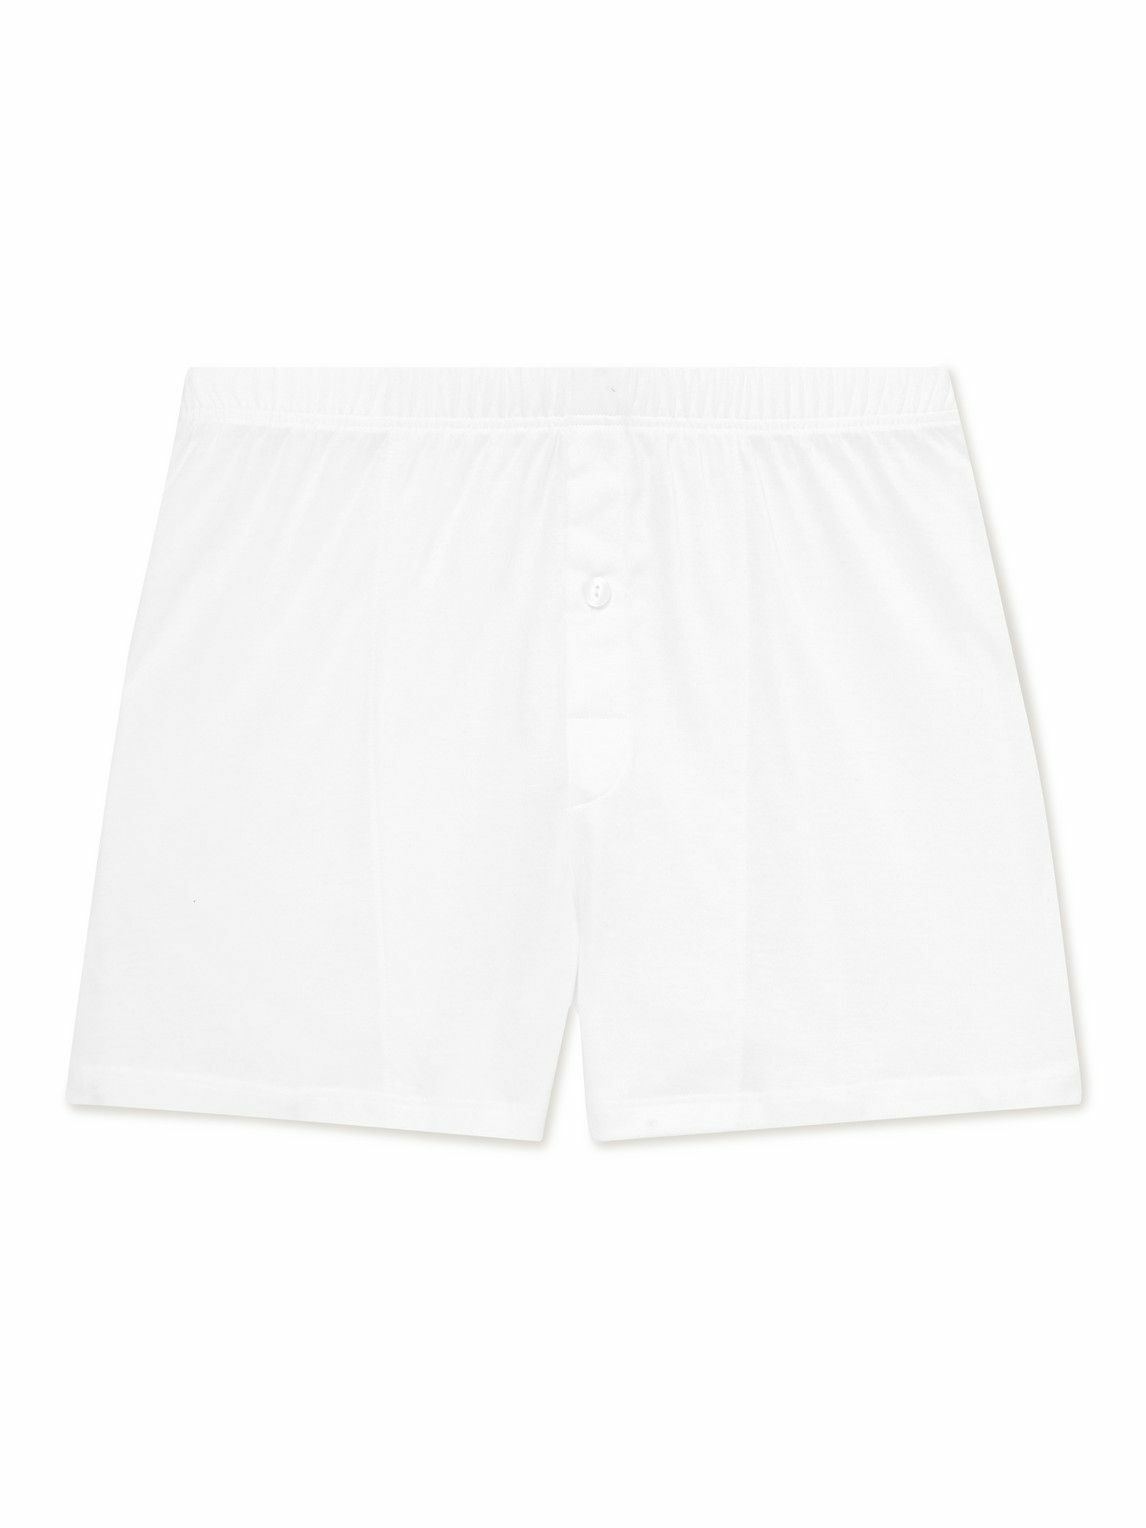 Photo: Hanro - Mercerised Cotton Boxer Shorts - White